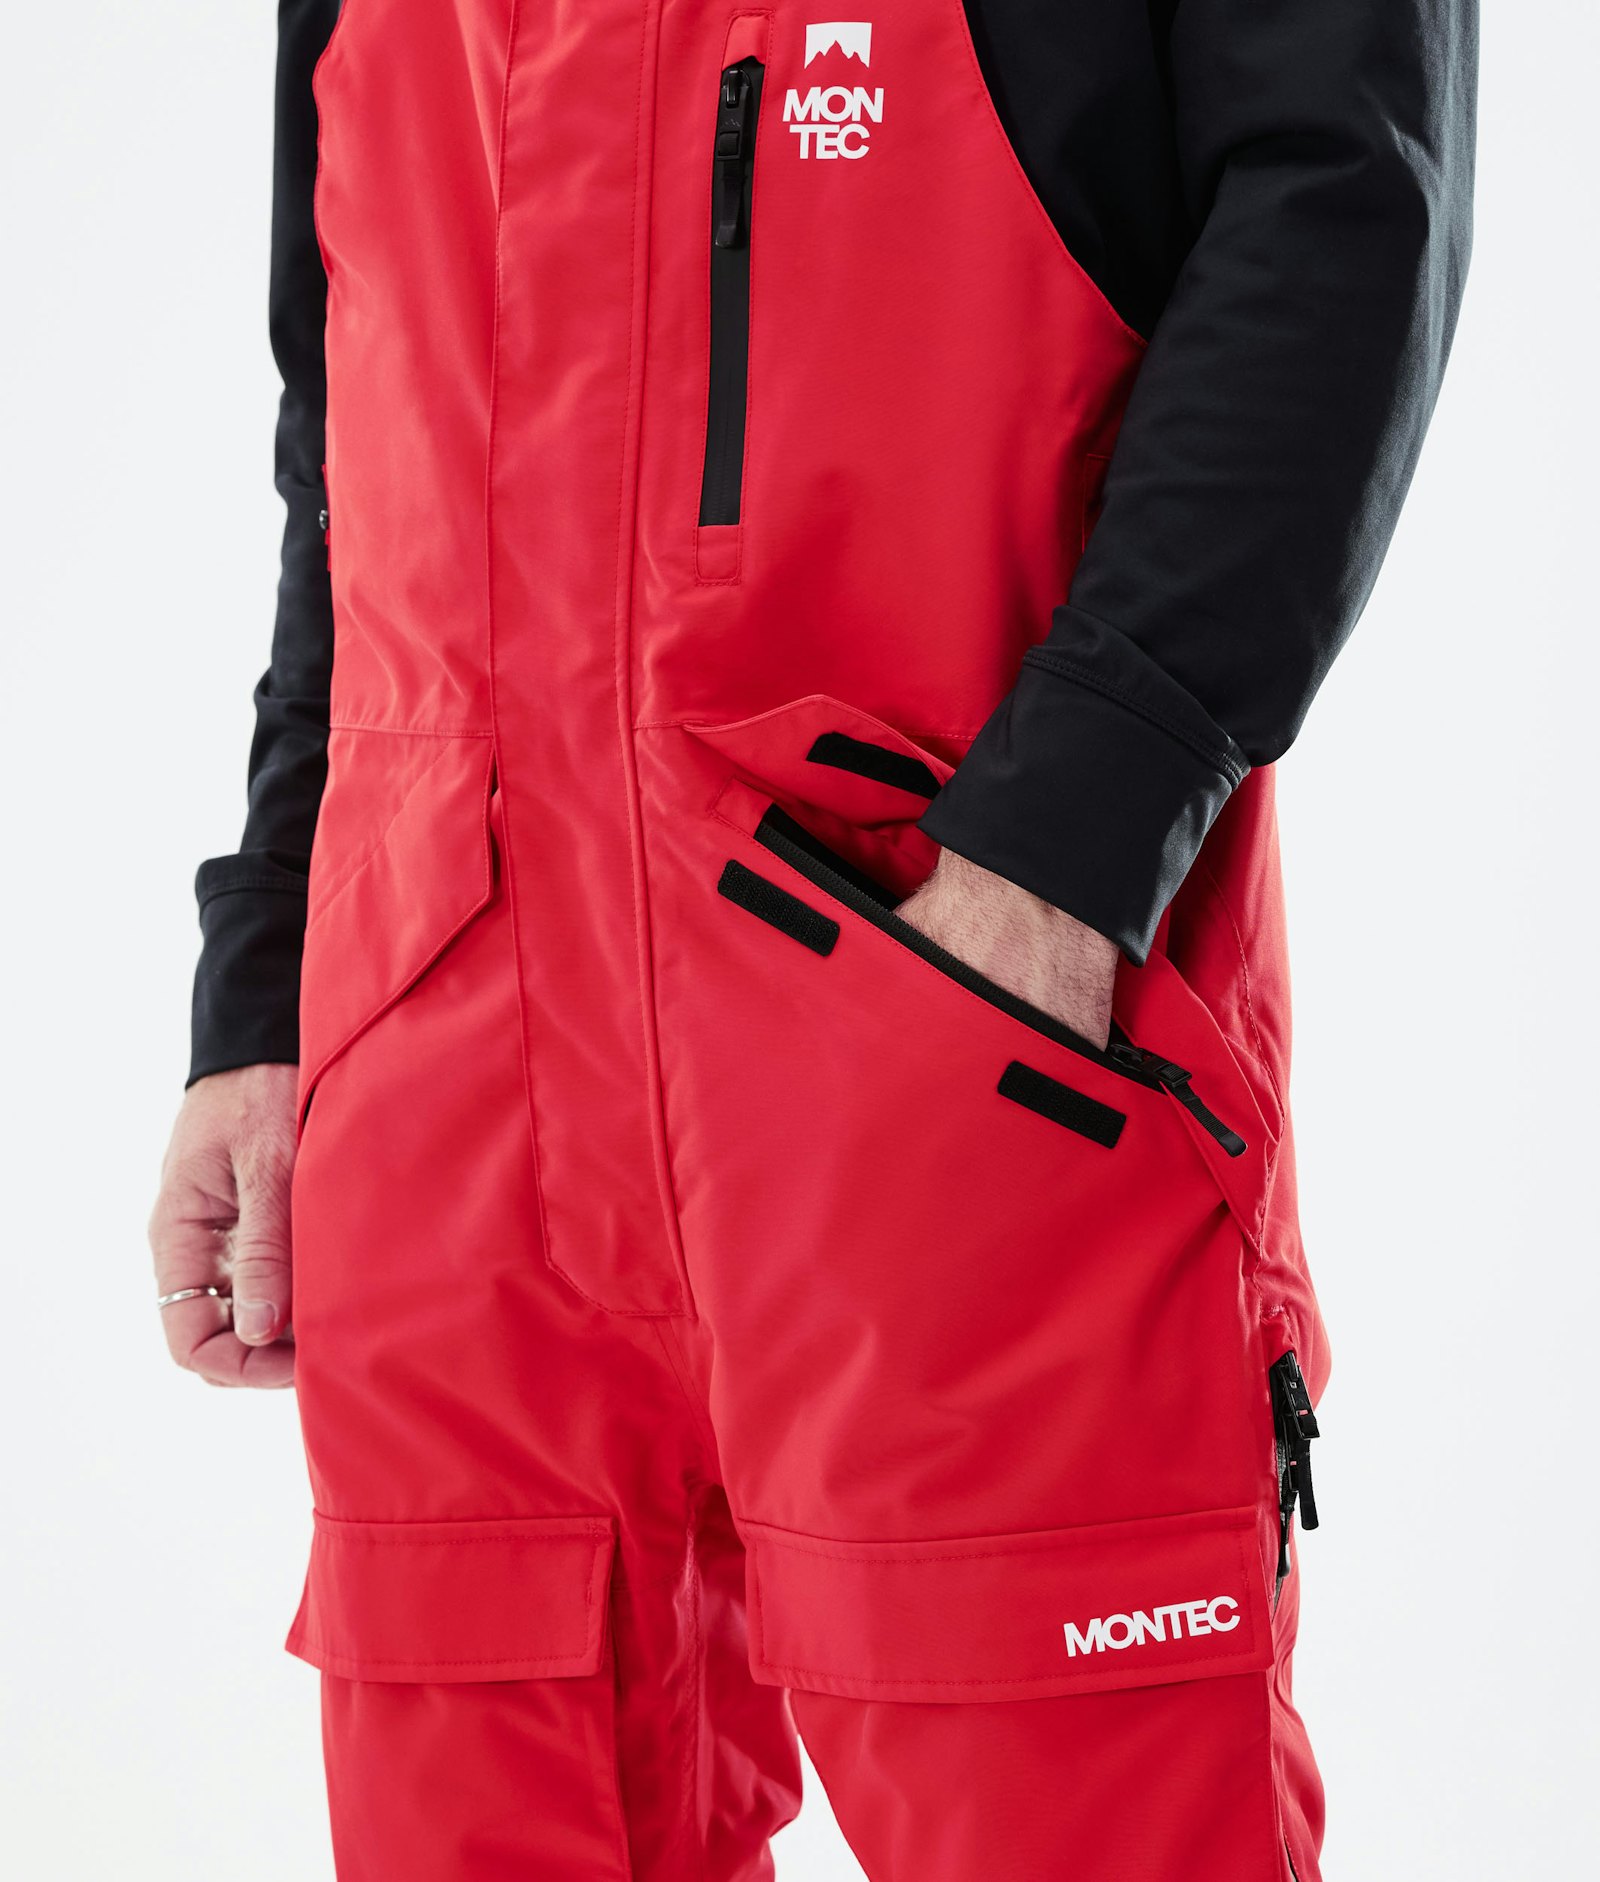 Fawk 2021 Pantalon de Snowboard Homme Red